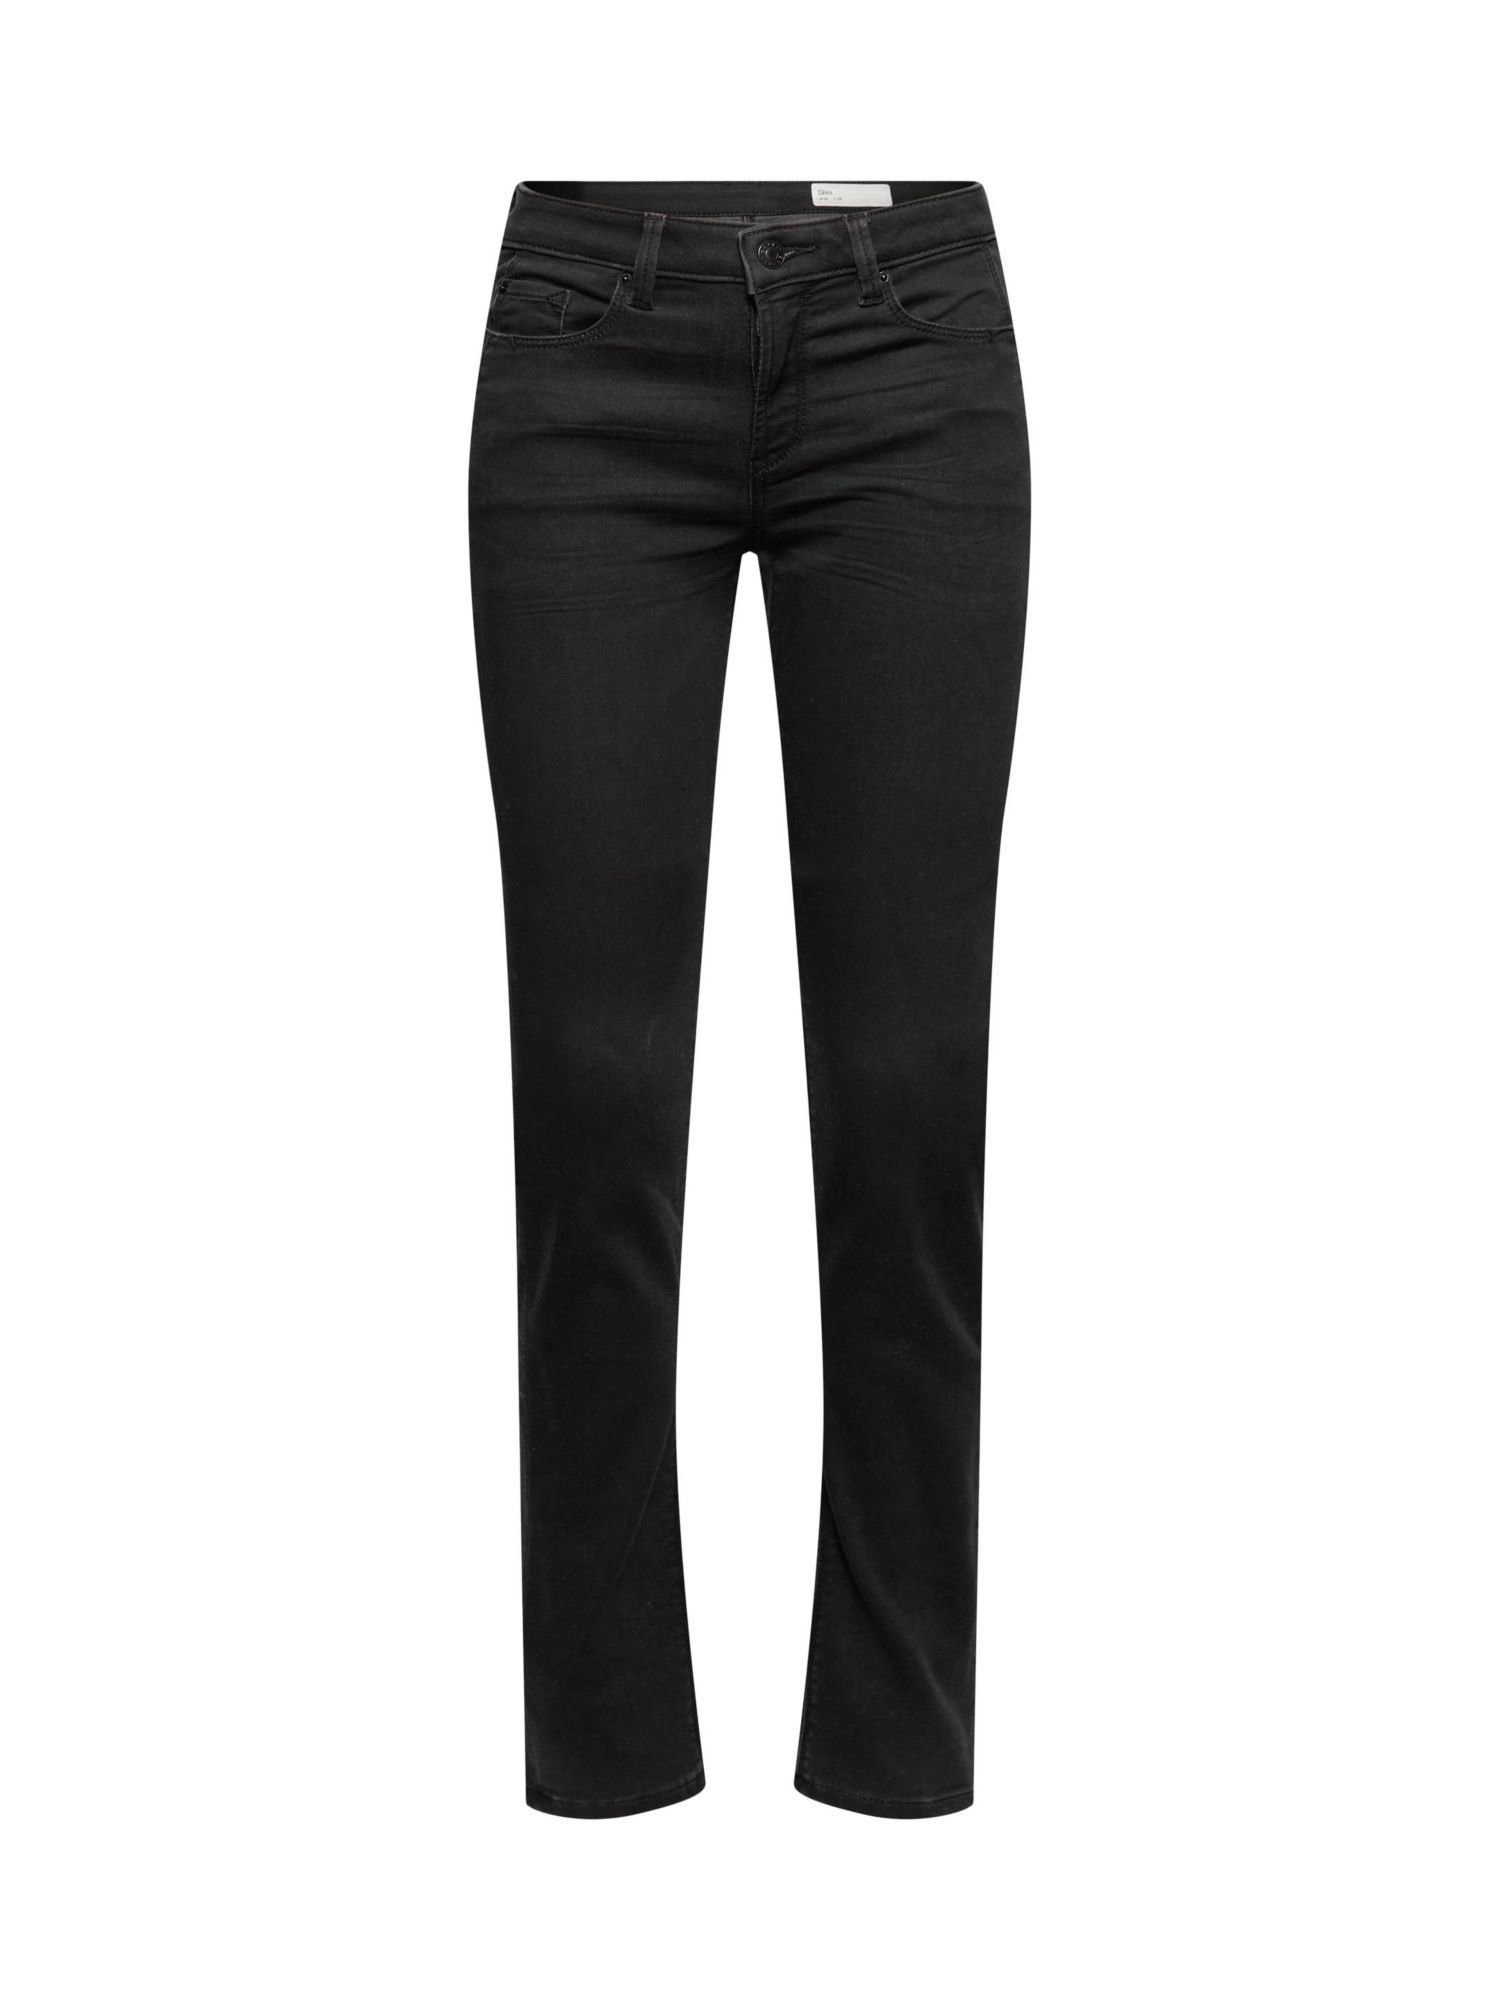 Esprit Slim-fit-Jeans Black-Denim Jeans in bequemer Jogg-Qualität